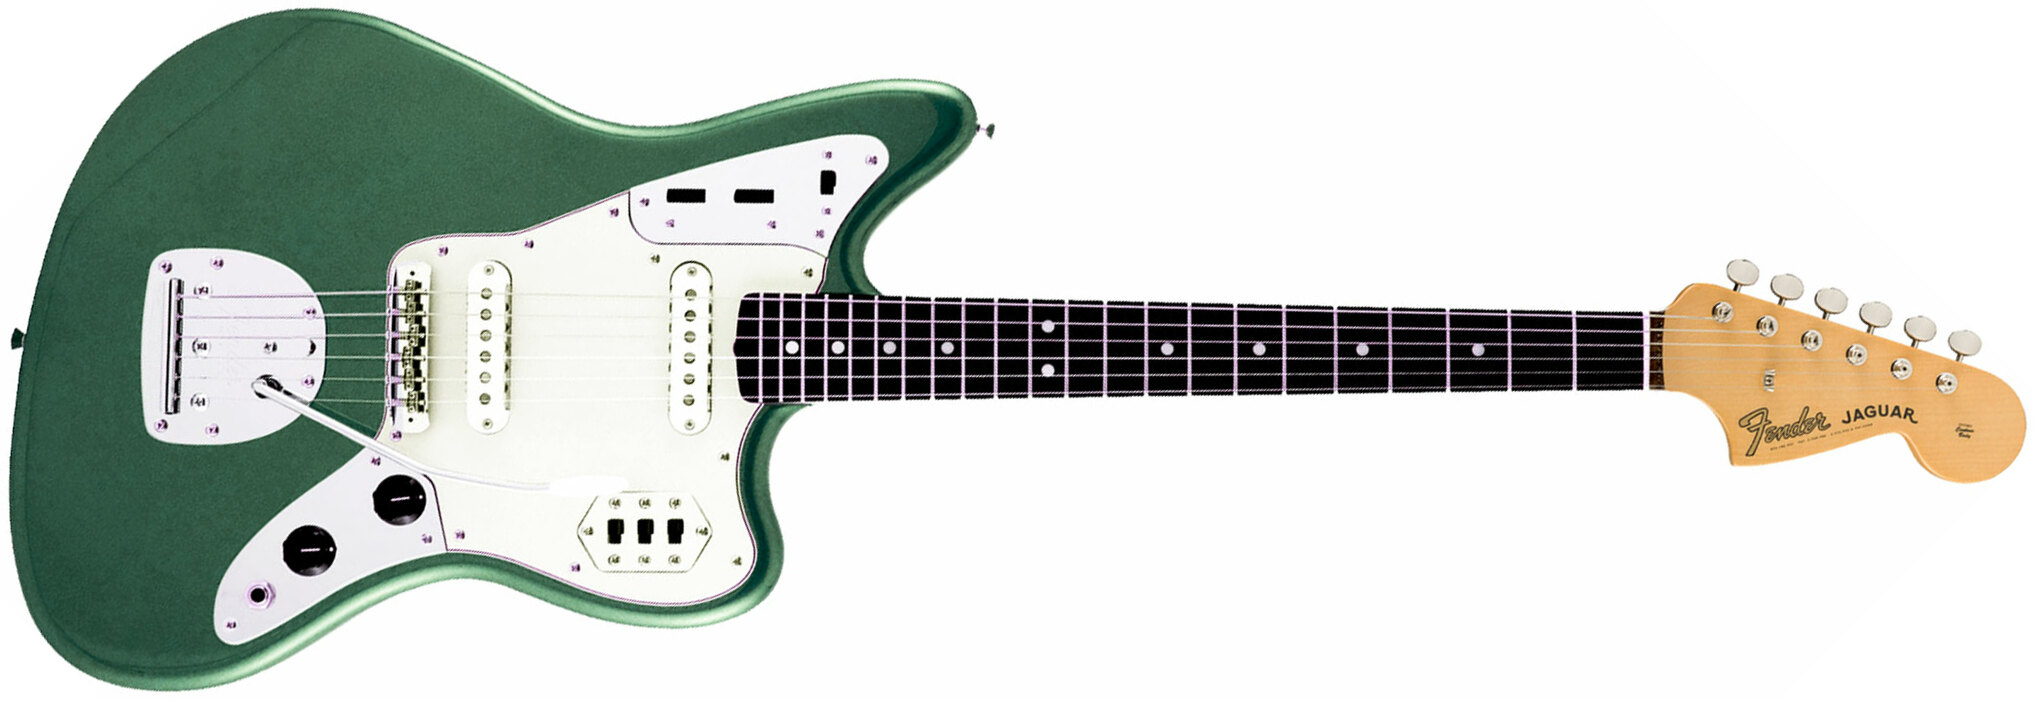 Fender Jaguar Traditional Ii 60s Jap 2s Trem Rw - Sherwood Green Metallic - Retro-Rock-E-Gitarre - Main picture